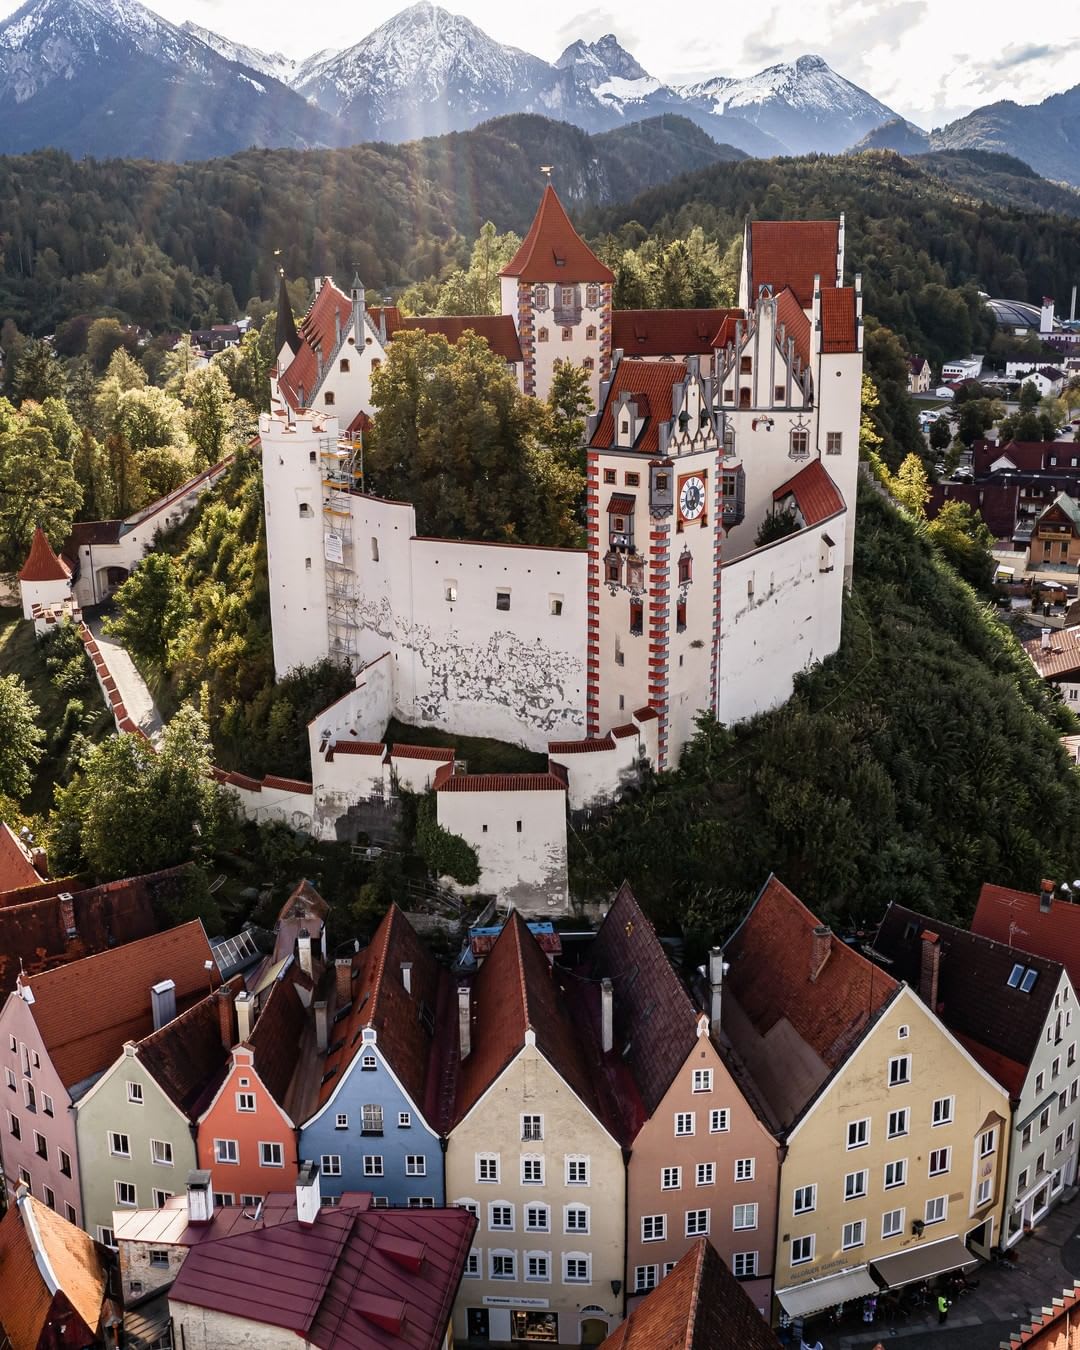 Hohes Schloss(High Castle) towering over the town of Füssen, Ostallgäu, Bavaria, Germany.